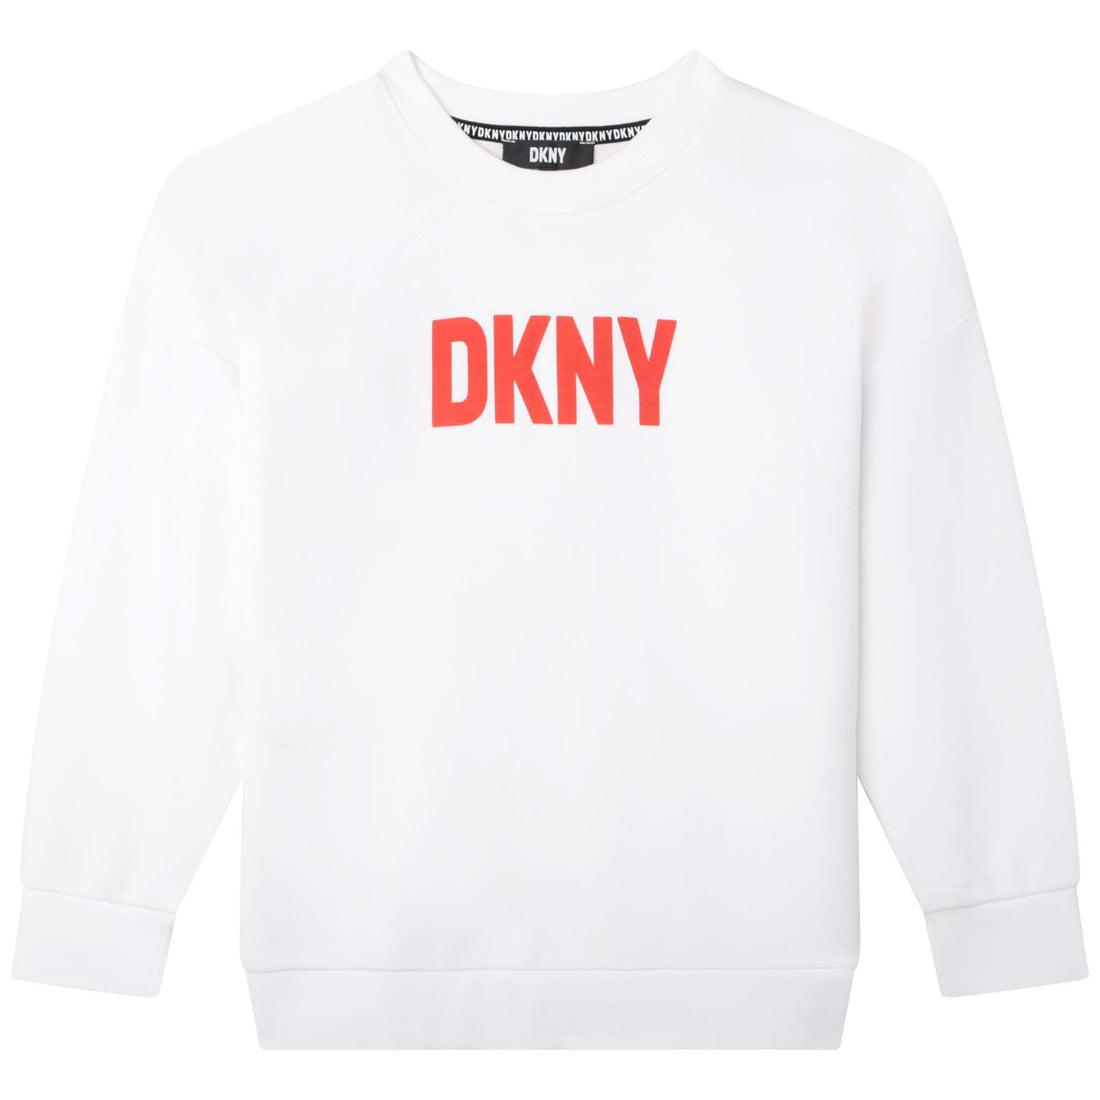 DKNY Font FREE Download | Hyperpix